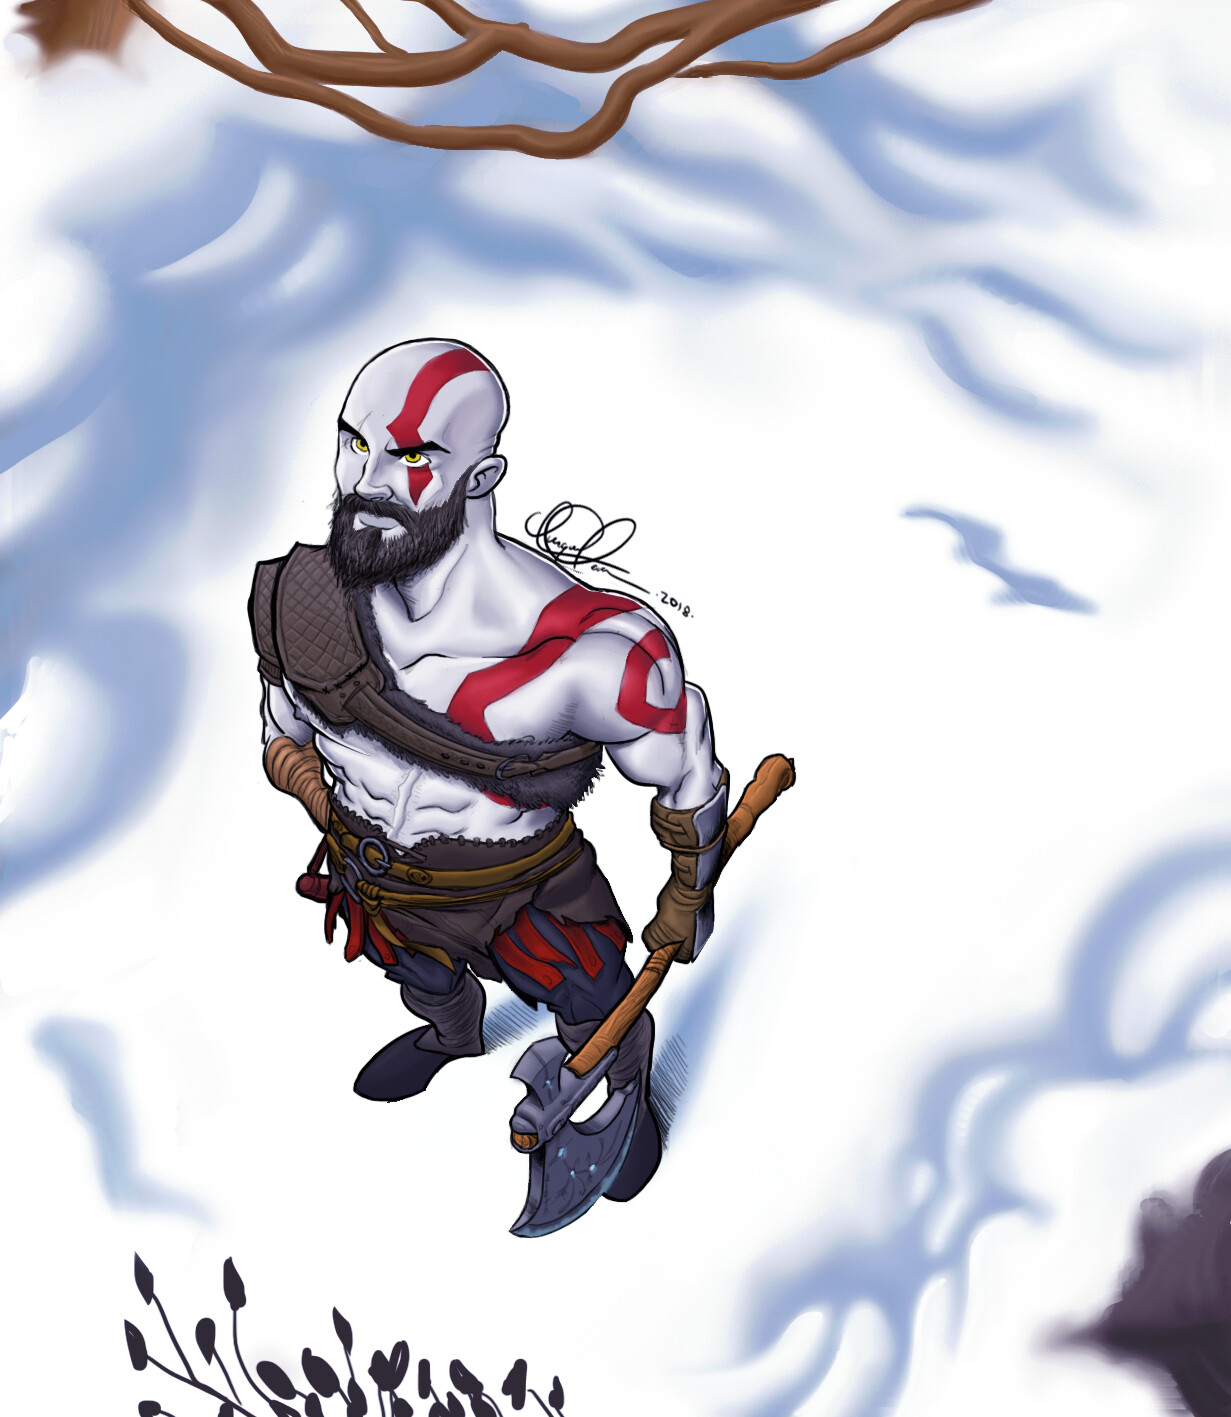 Kratos from God of War (2018)